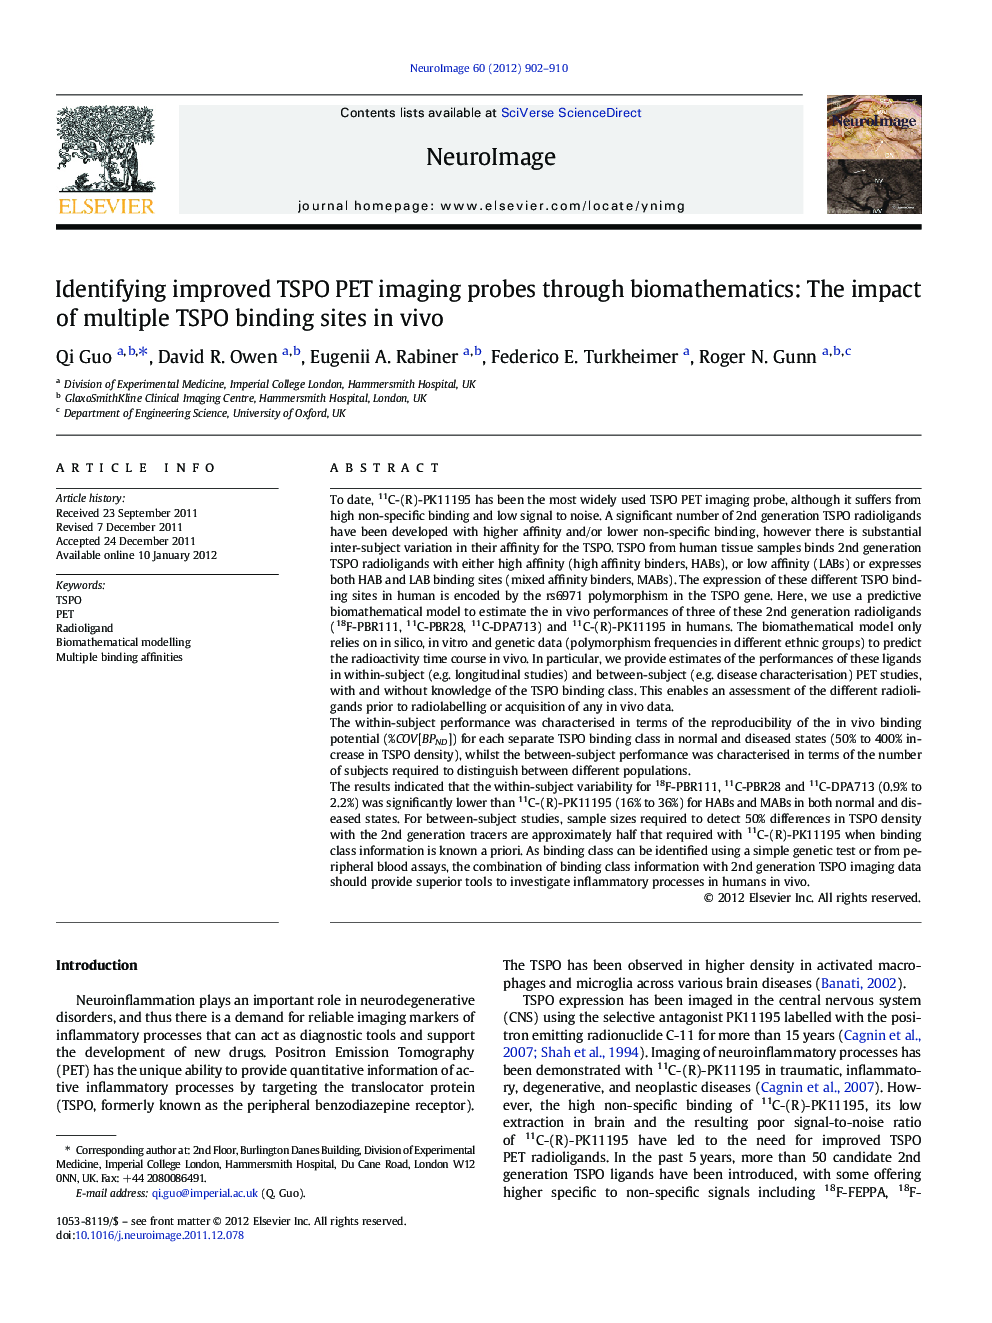 Identifying improved TSPO PET imaging probes through biomathematics: The impact of multiple TSPO binding sites in vivo